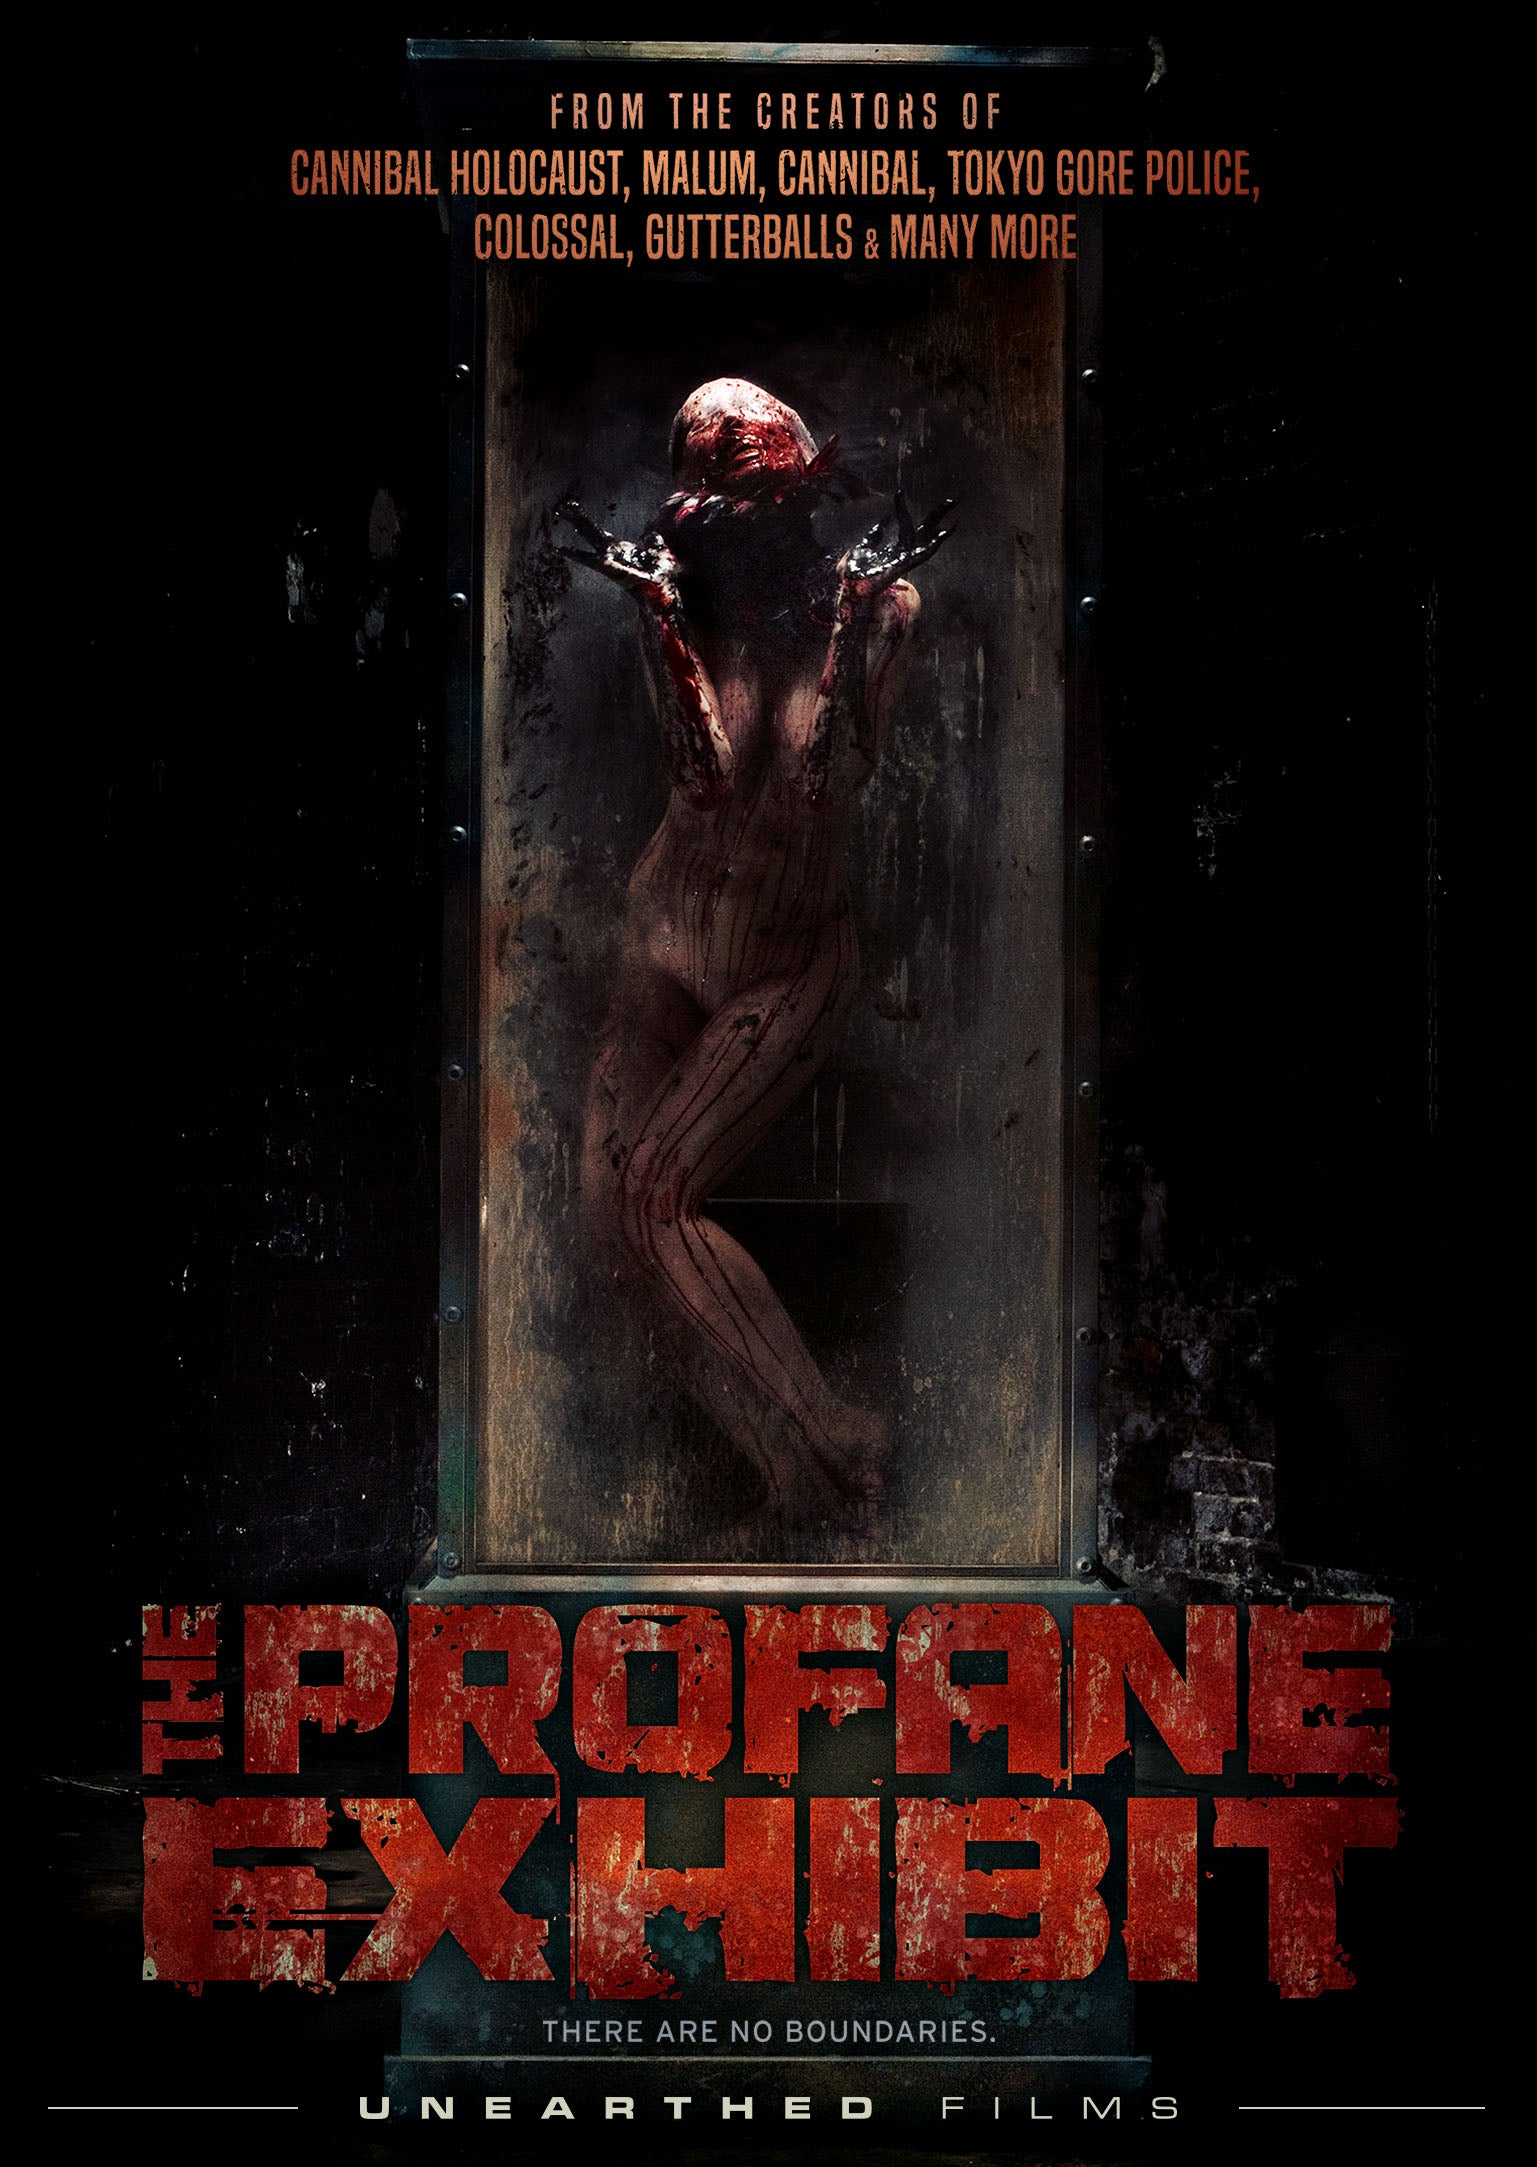 THE PROFANE EXHIBIT DVD [PRE-ORDER]